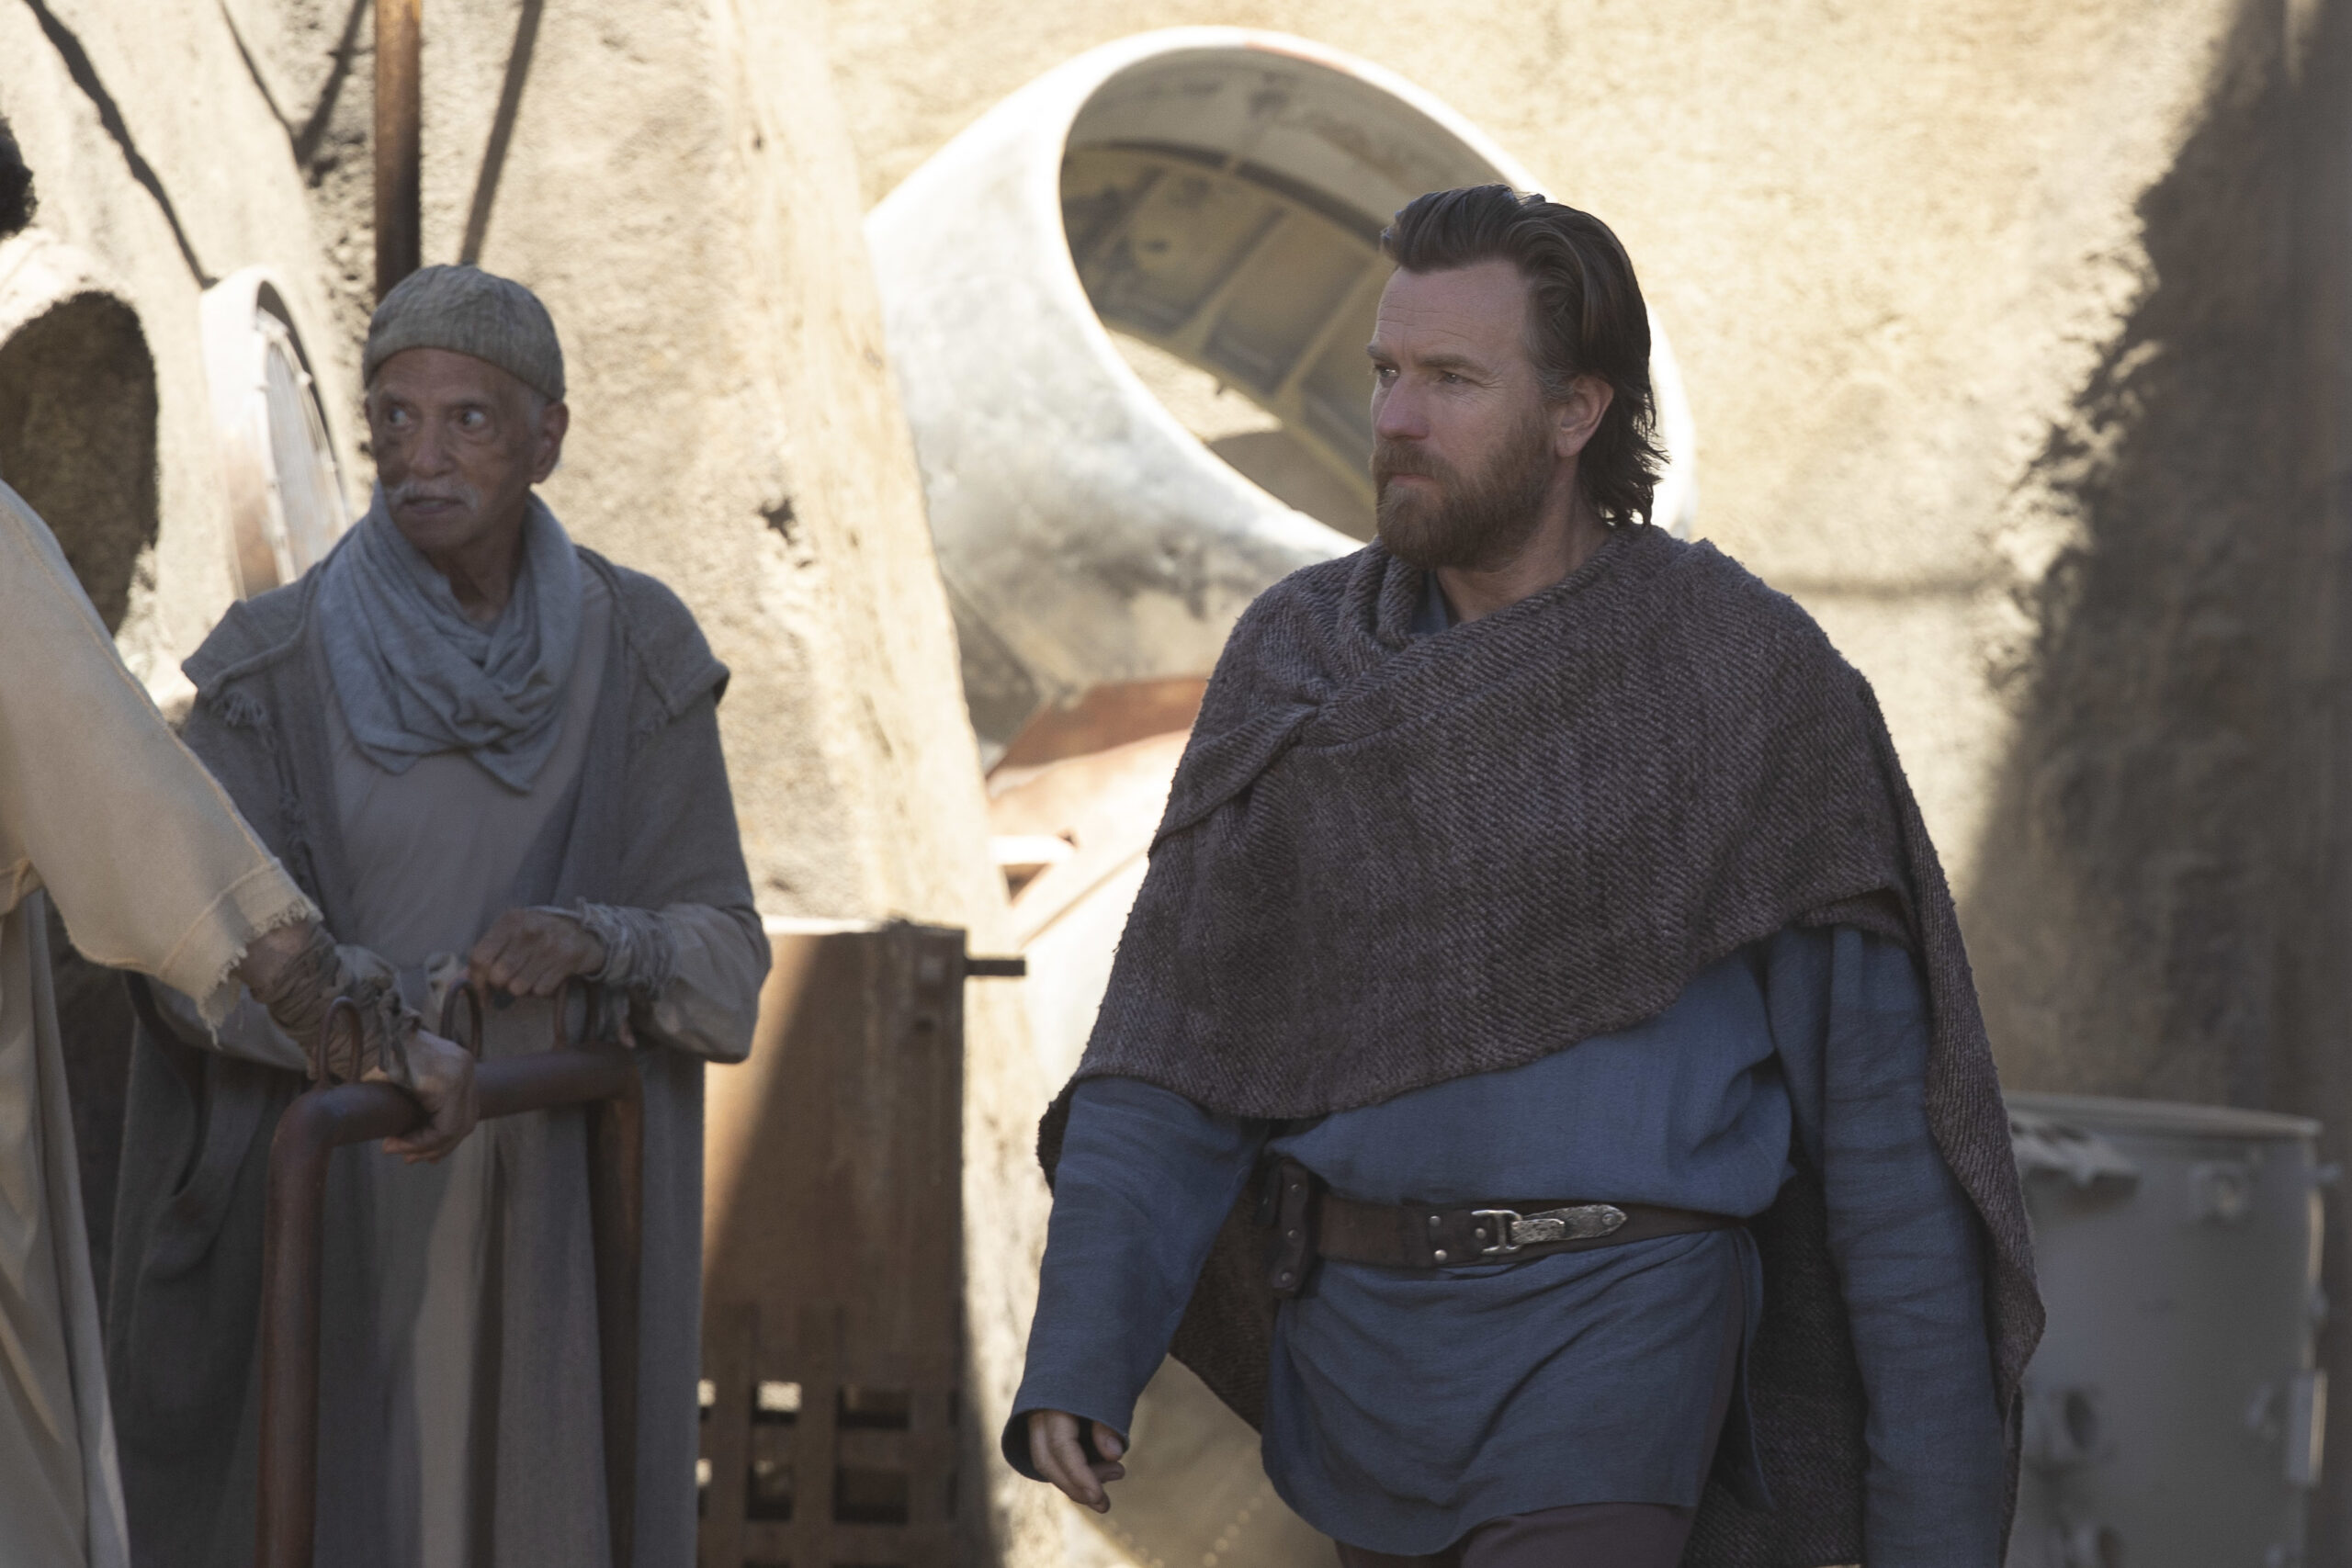 Ewan McGregor as Obi-Wan Kenobi on the Obi-Wan Kenobi series for Disney+.